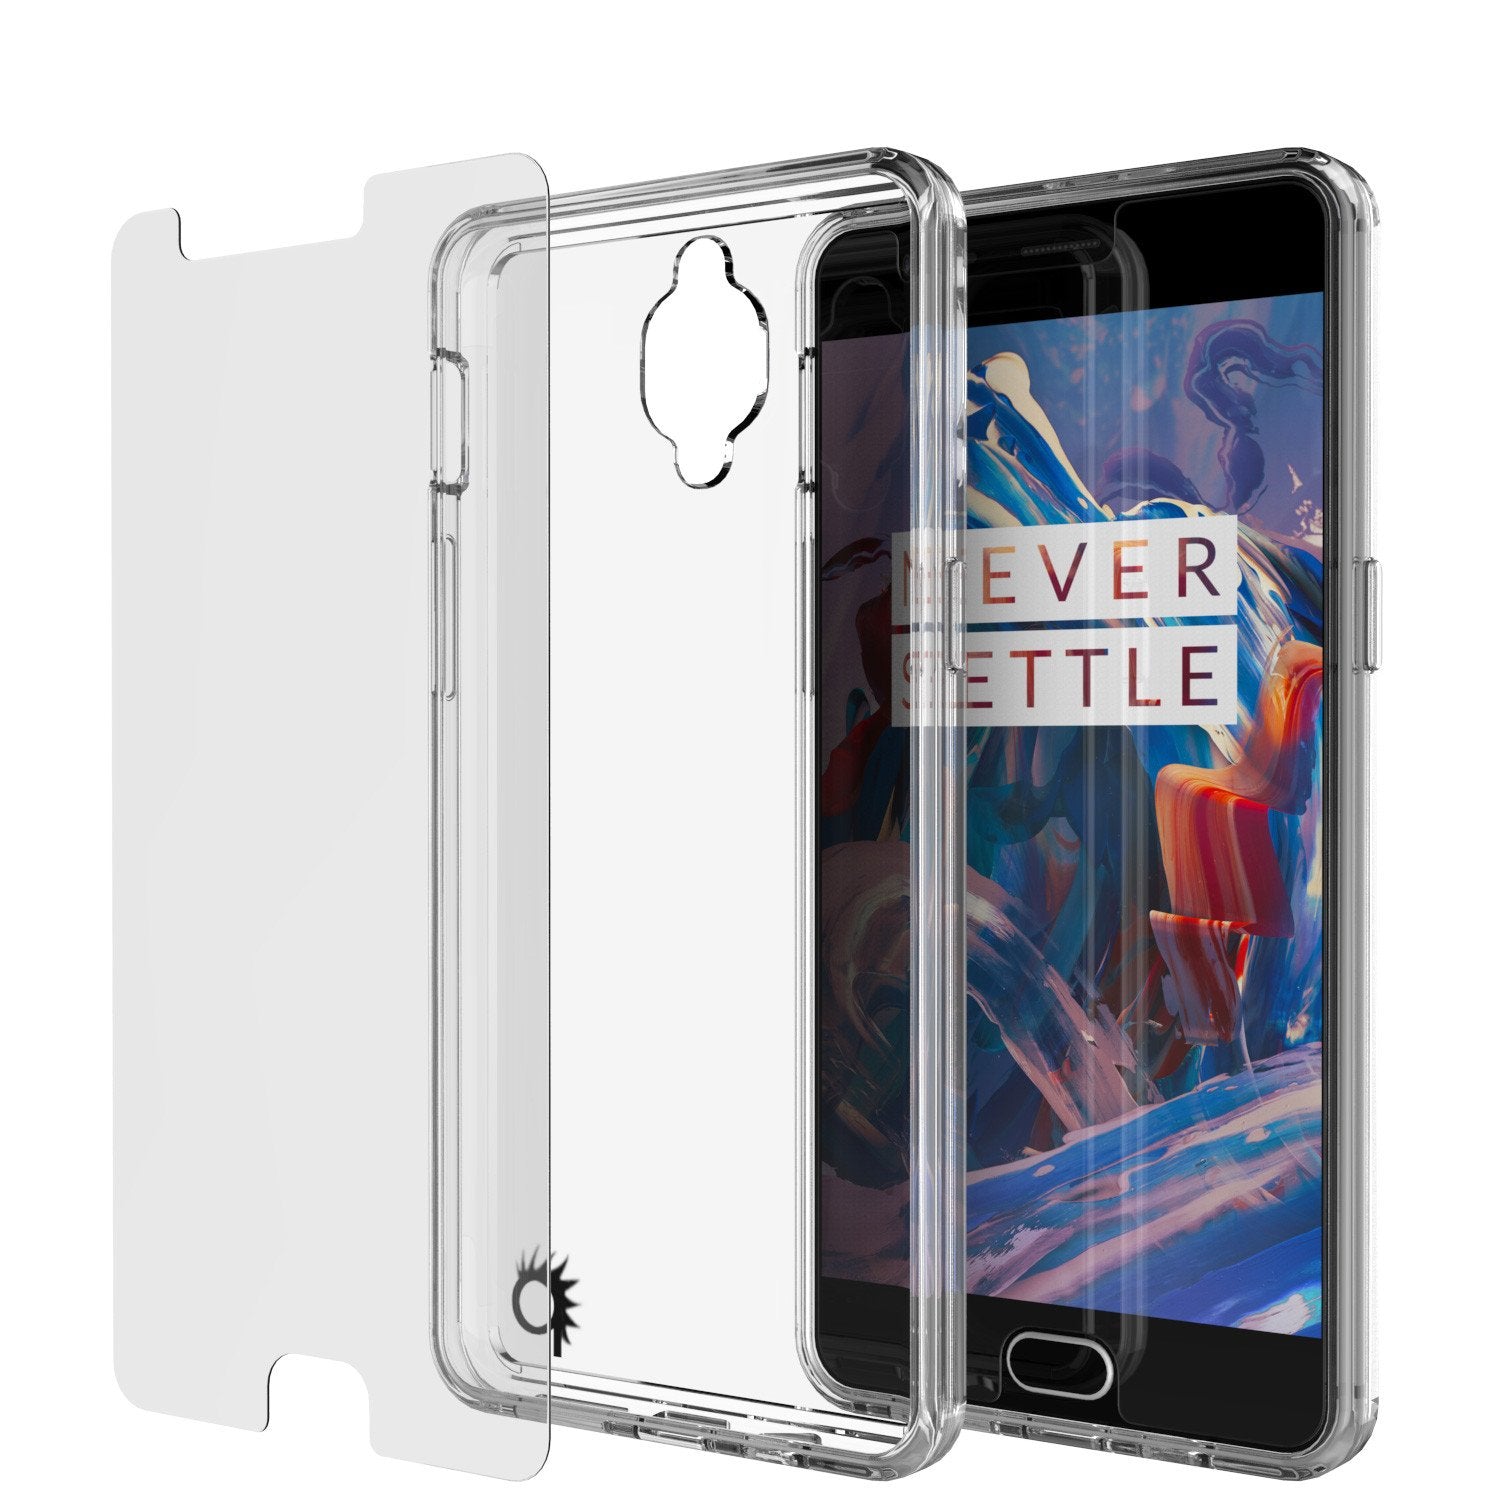 OnePlus 3 Case Punkcase® LUCID 2.0 Clear Series w/ SHIELD GLASS Lifetime Warranty Exchange